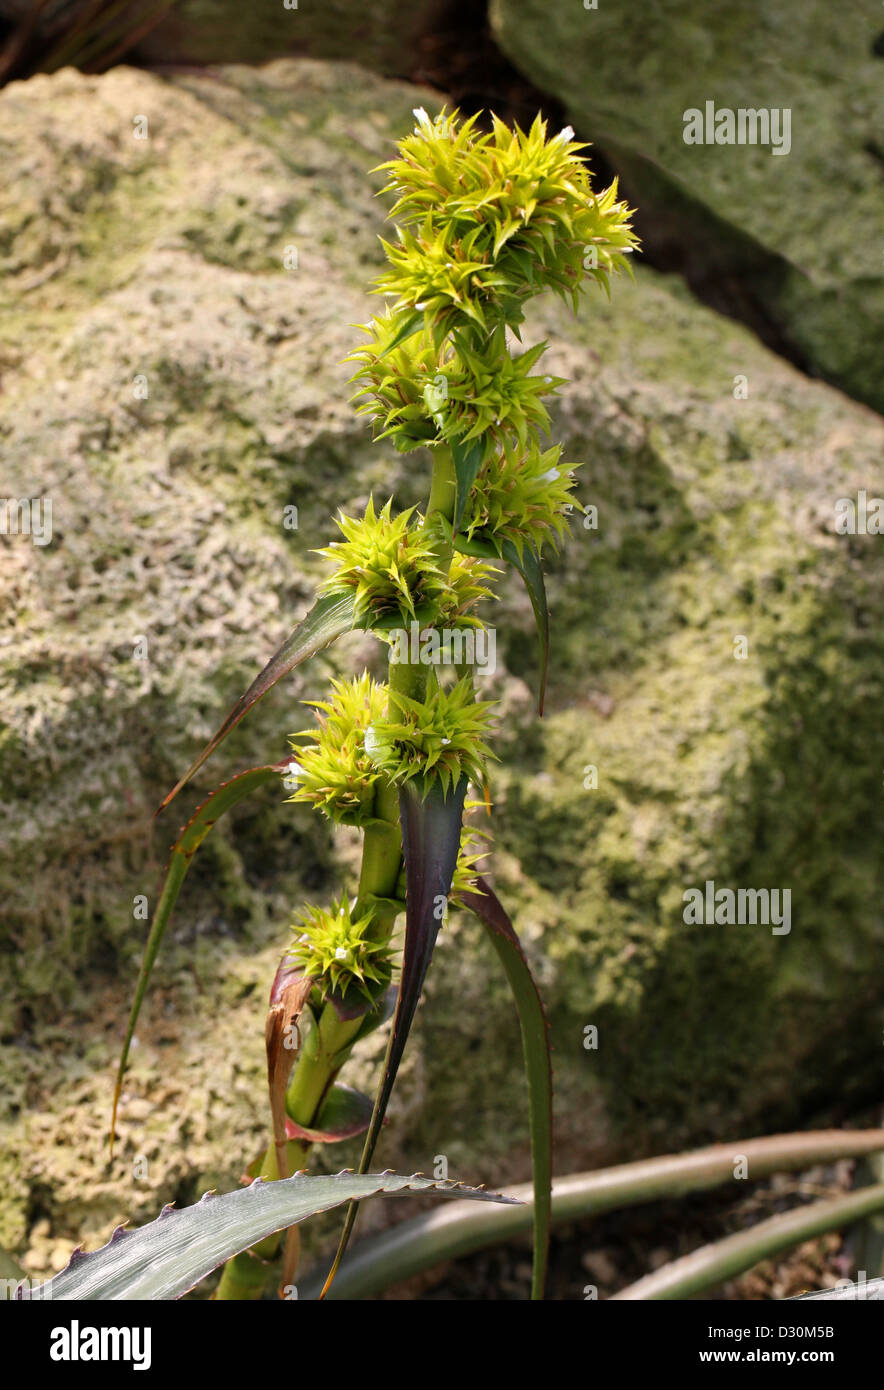 Bromeliad, Orthophytum glabrum, Bromeliaceae. Brazil, South America. Stock Photo